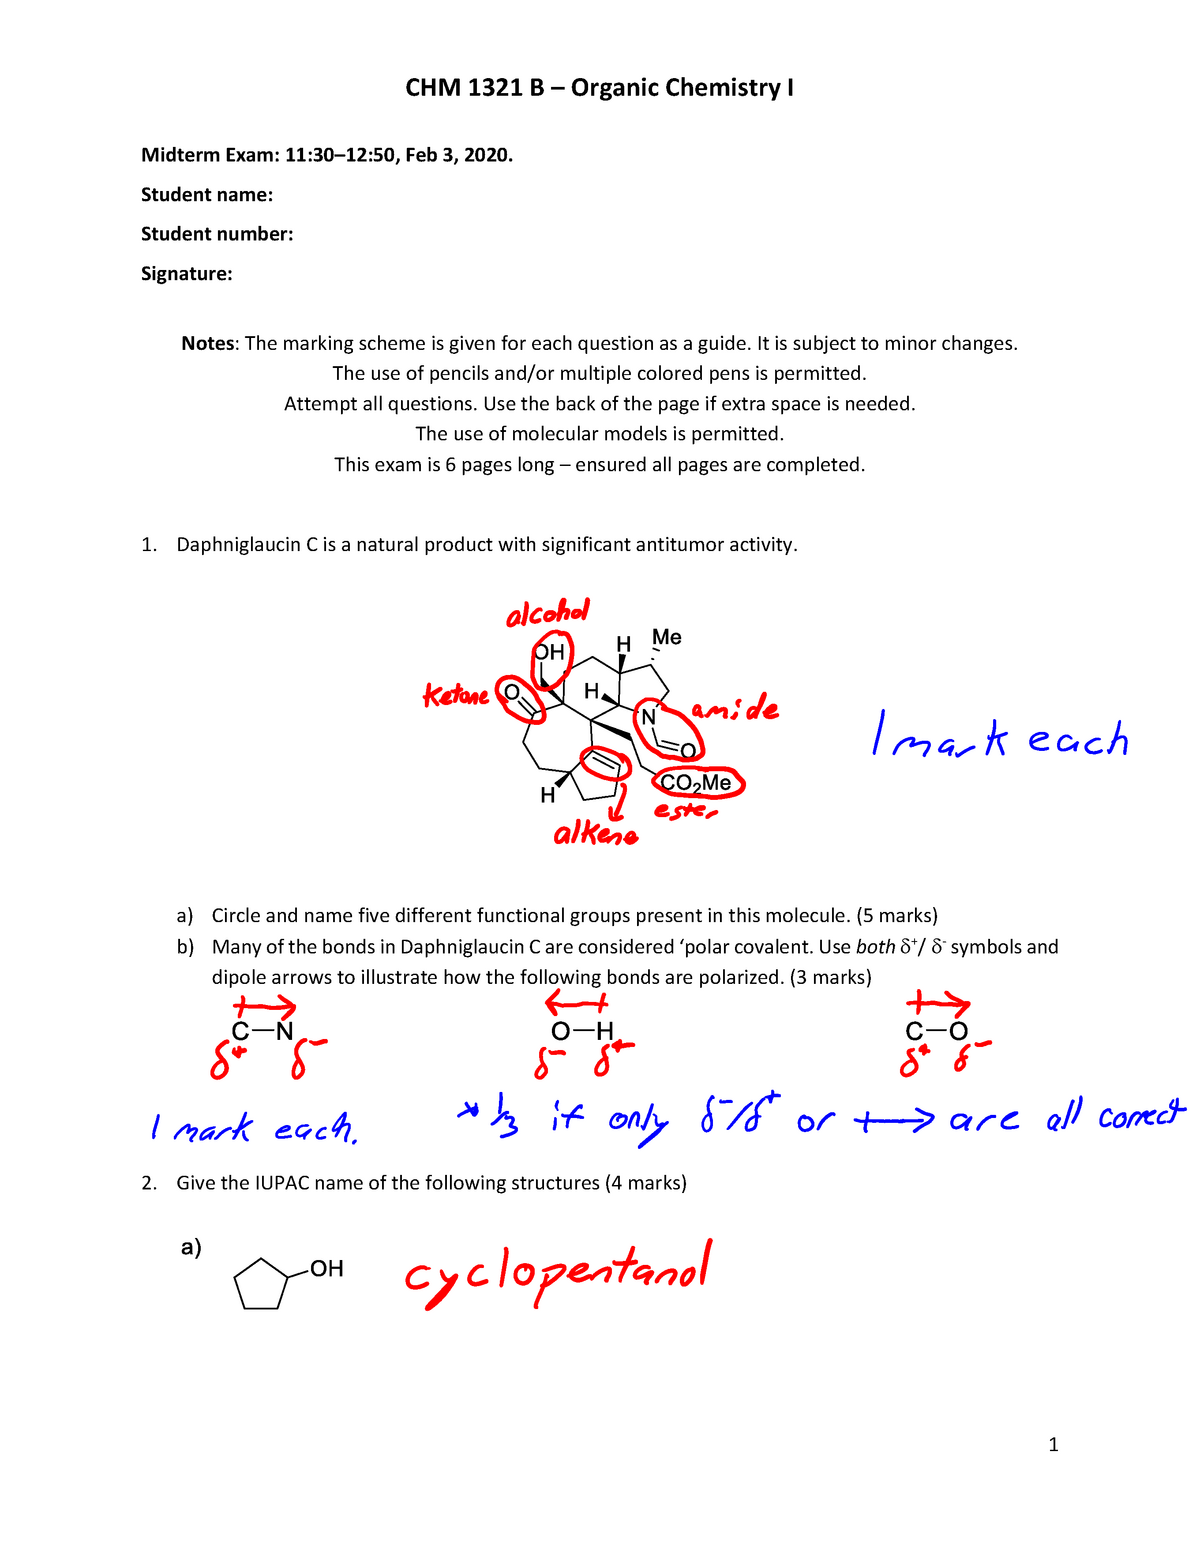 CHM1321 B Midterm exam 1 answer key CHM 1321 B Organic Chemistry I